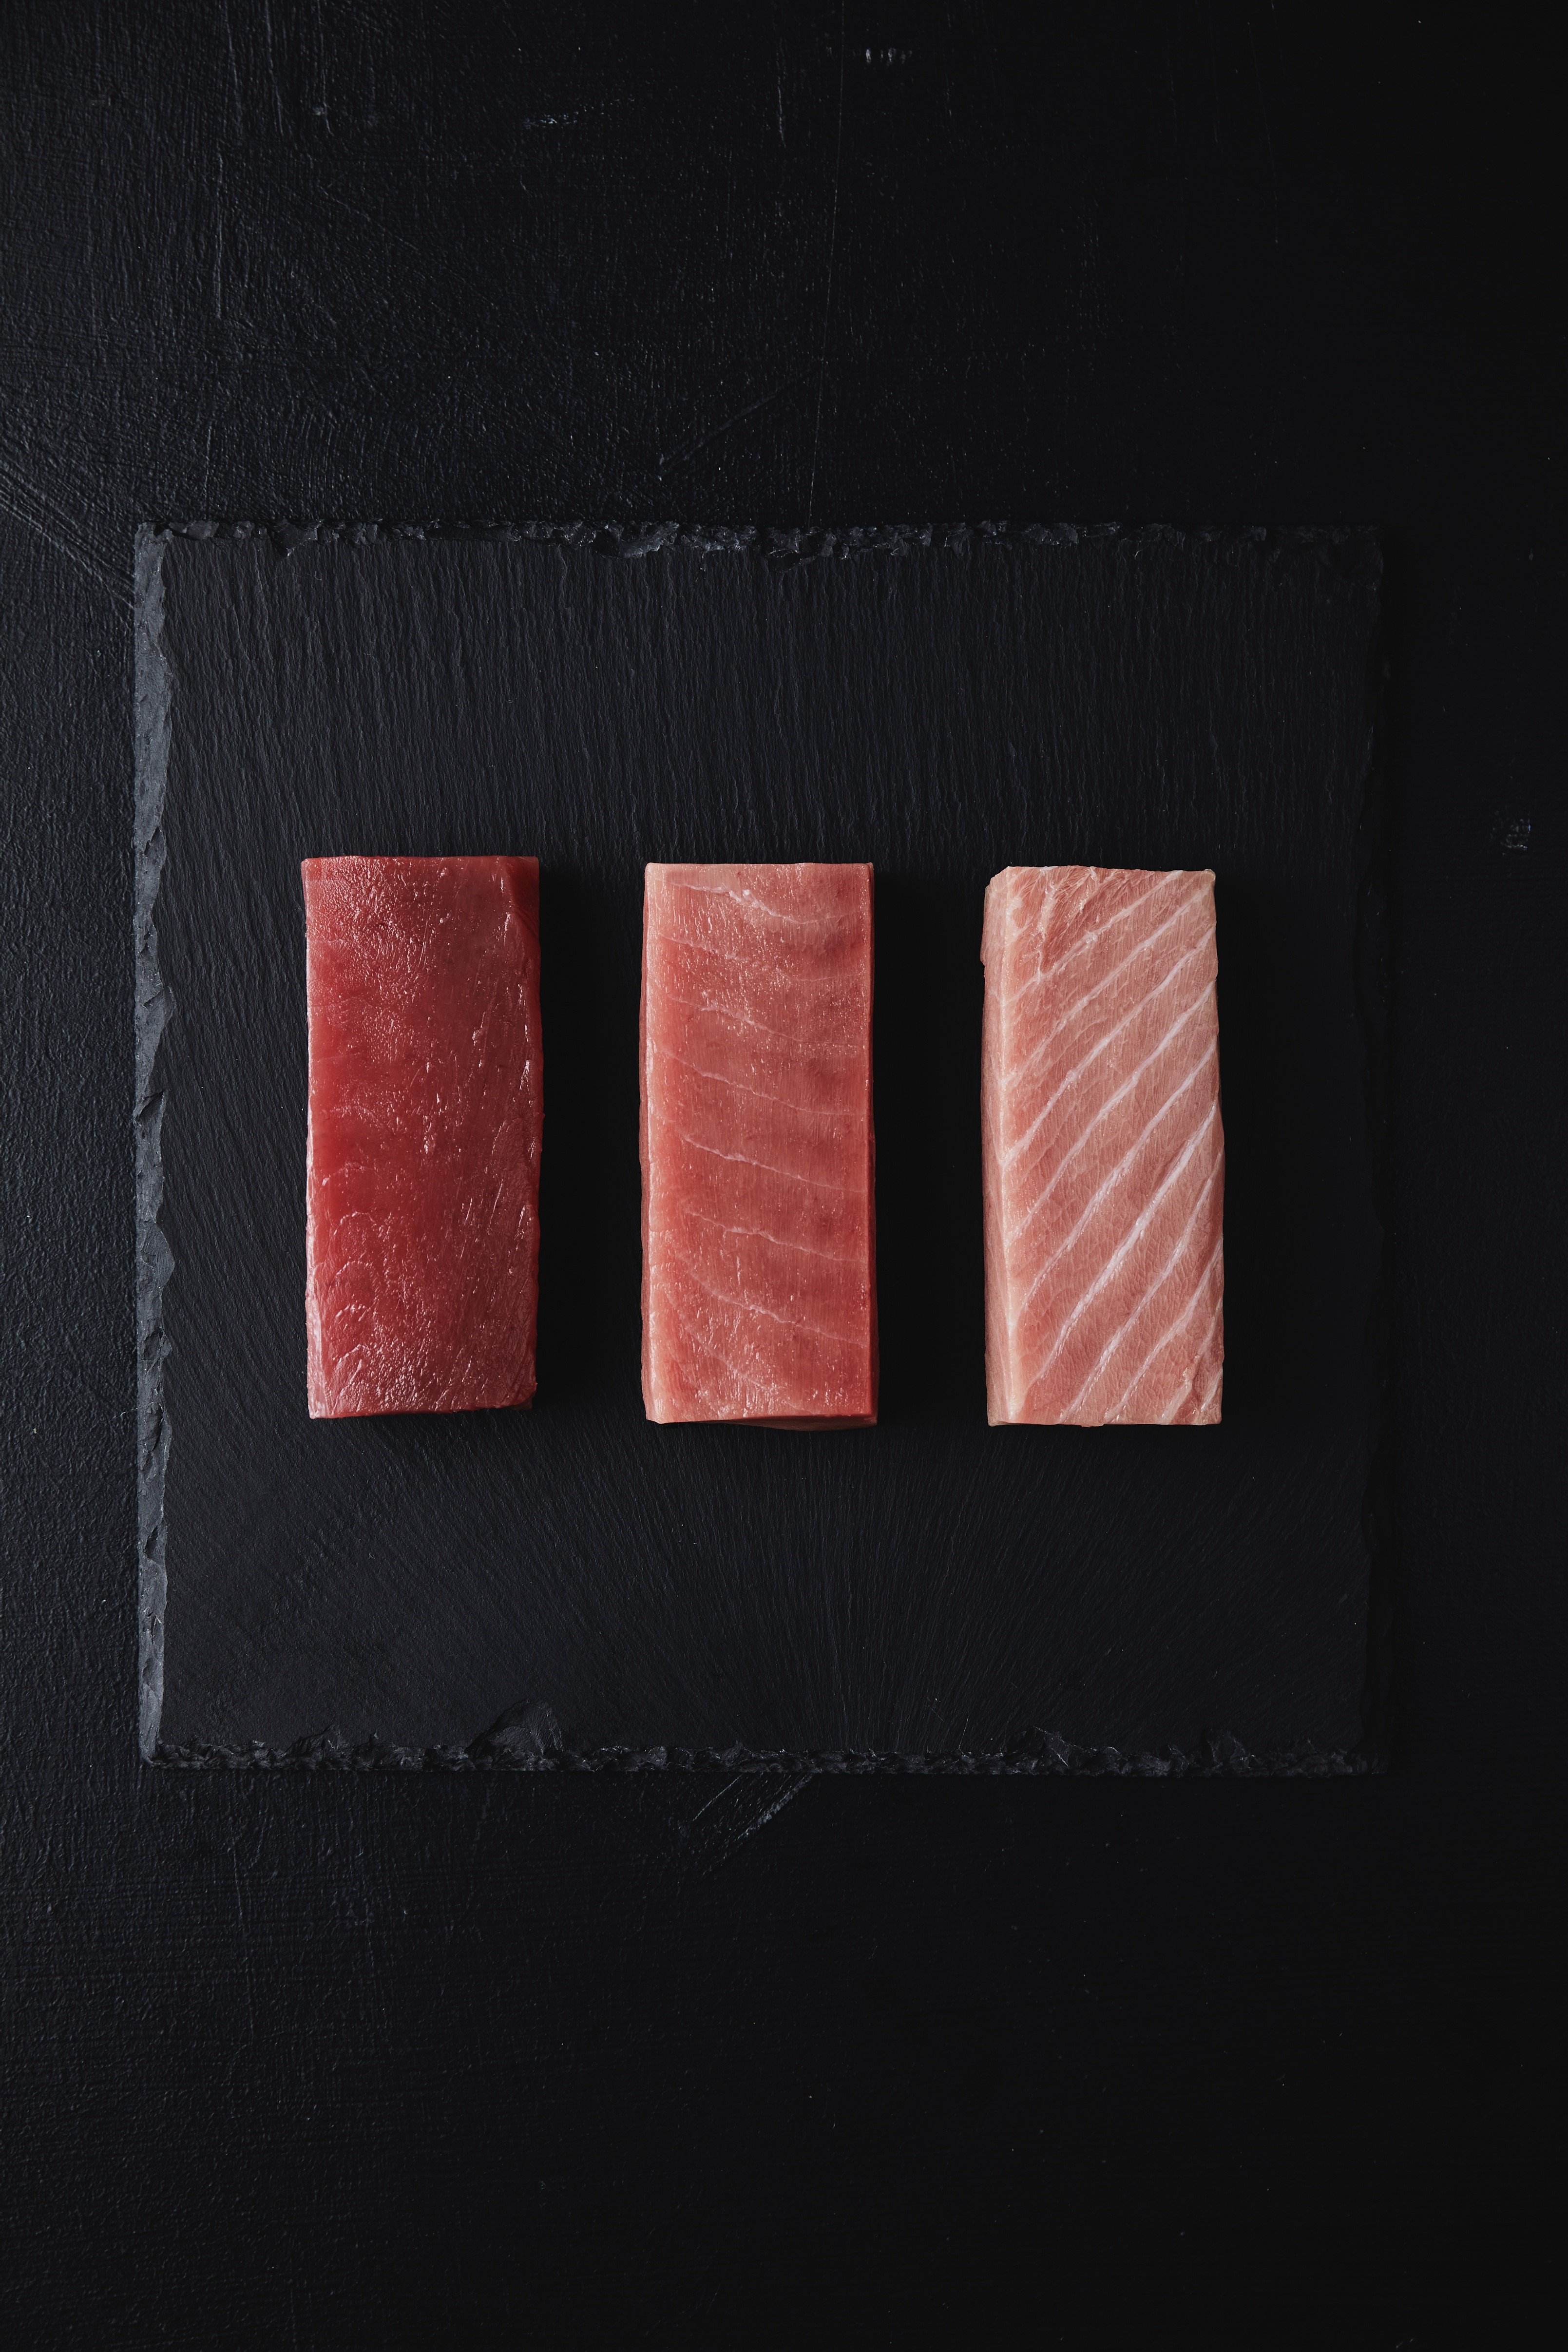 Three cuts of tuna presented on black cutting board